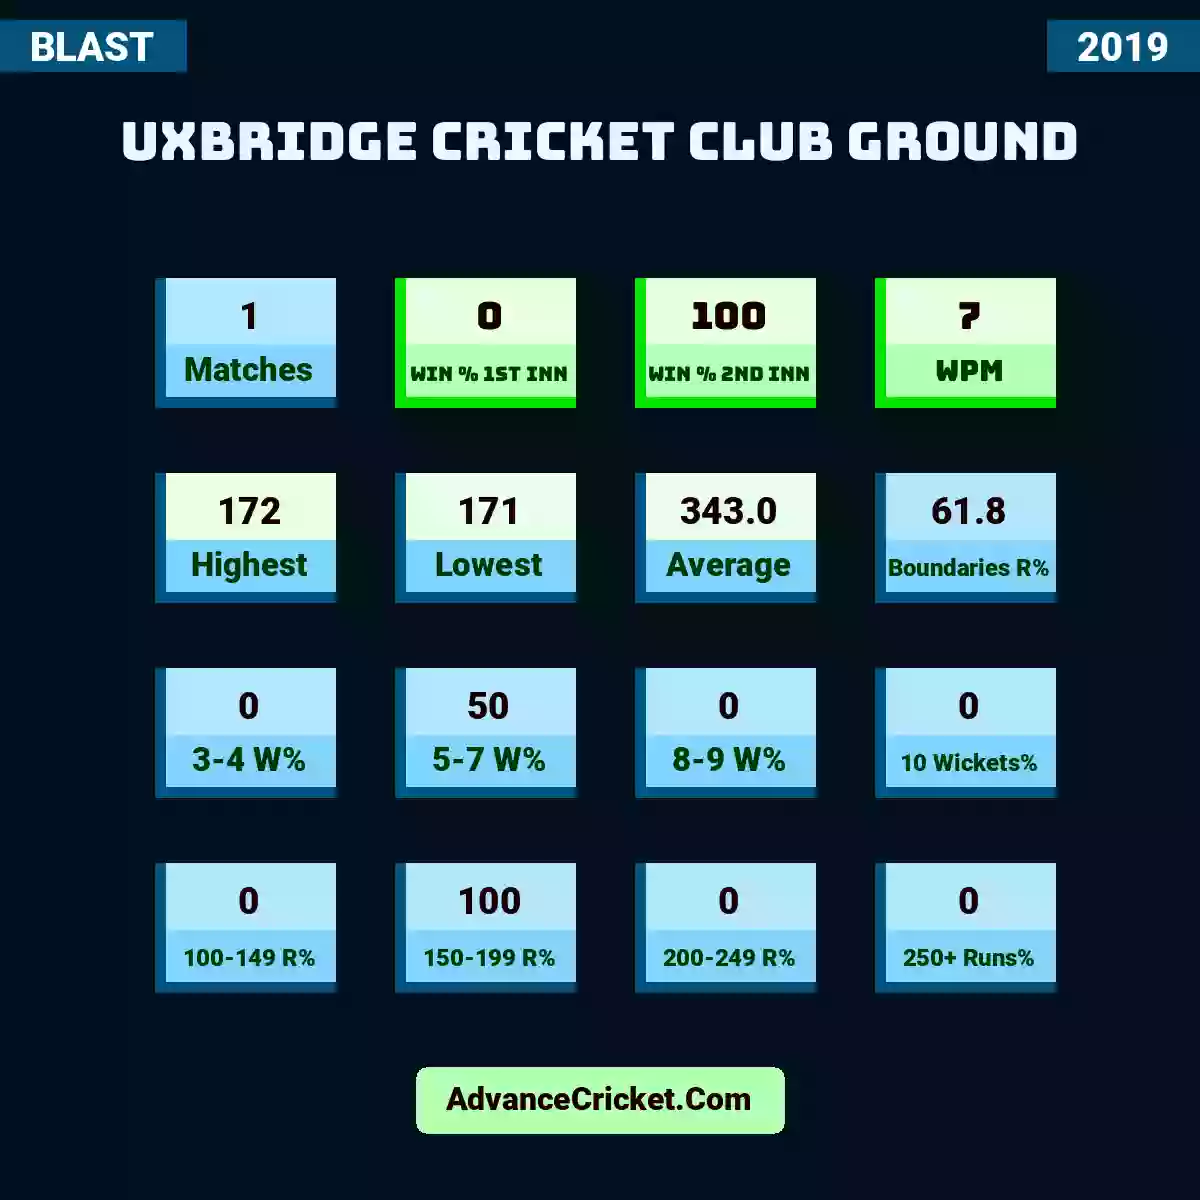 Image showing Uxbridge Cricket Club Ground with Matches: 1, Win % 1st Inn: 0, Win % 2nd Inn: 100, WPM: 7, Highest: 172, Lowest: 171, Average: 343.0, Boundaries R%: 61.8, 3-4 W%: 0, 5-7 W%: 50, 8-9 W%: 0, 10 Wickets%: 0, 100-149 R%: 0, 150-199 R%: 100, 200-249 R%: 0, 250+ Runs%: 0.